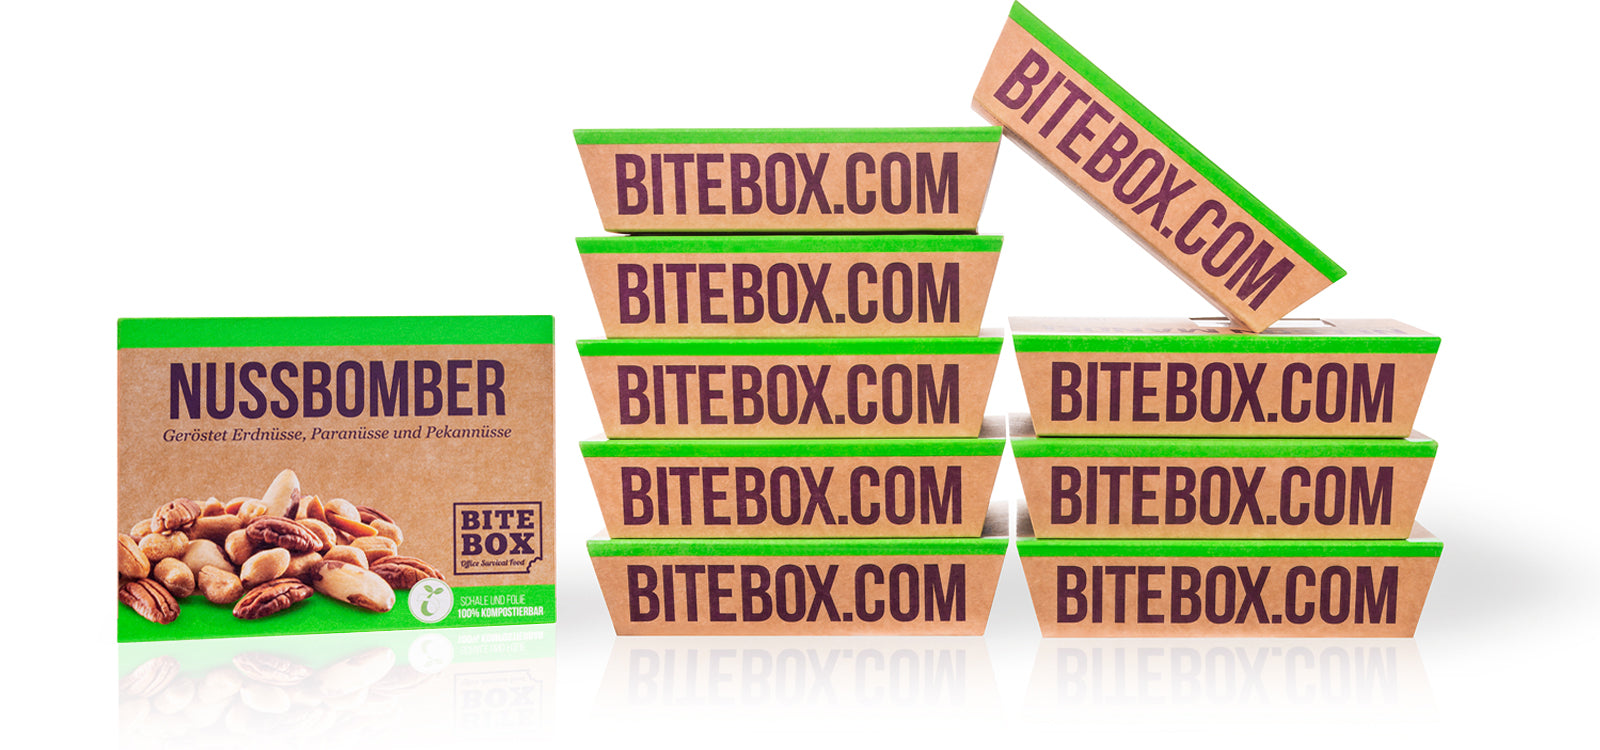 Snack Pakete für Veganer - bitebox.com